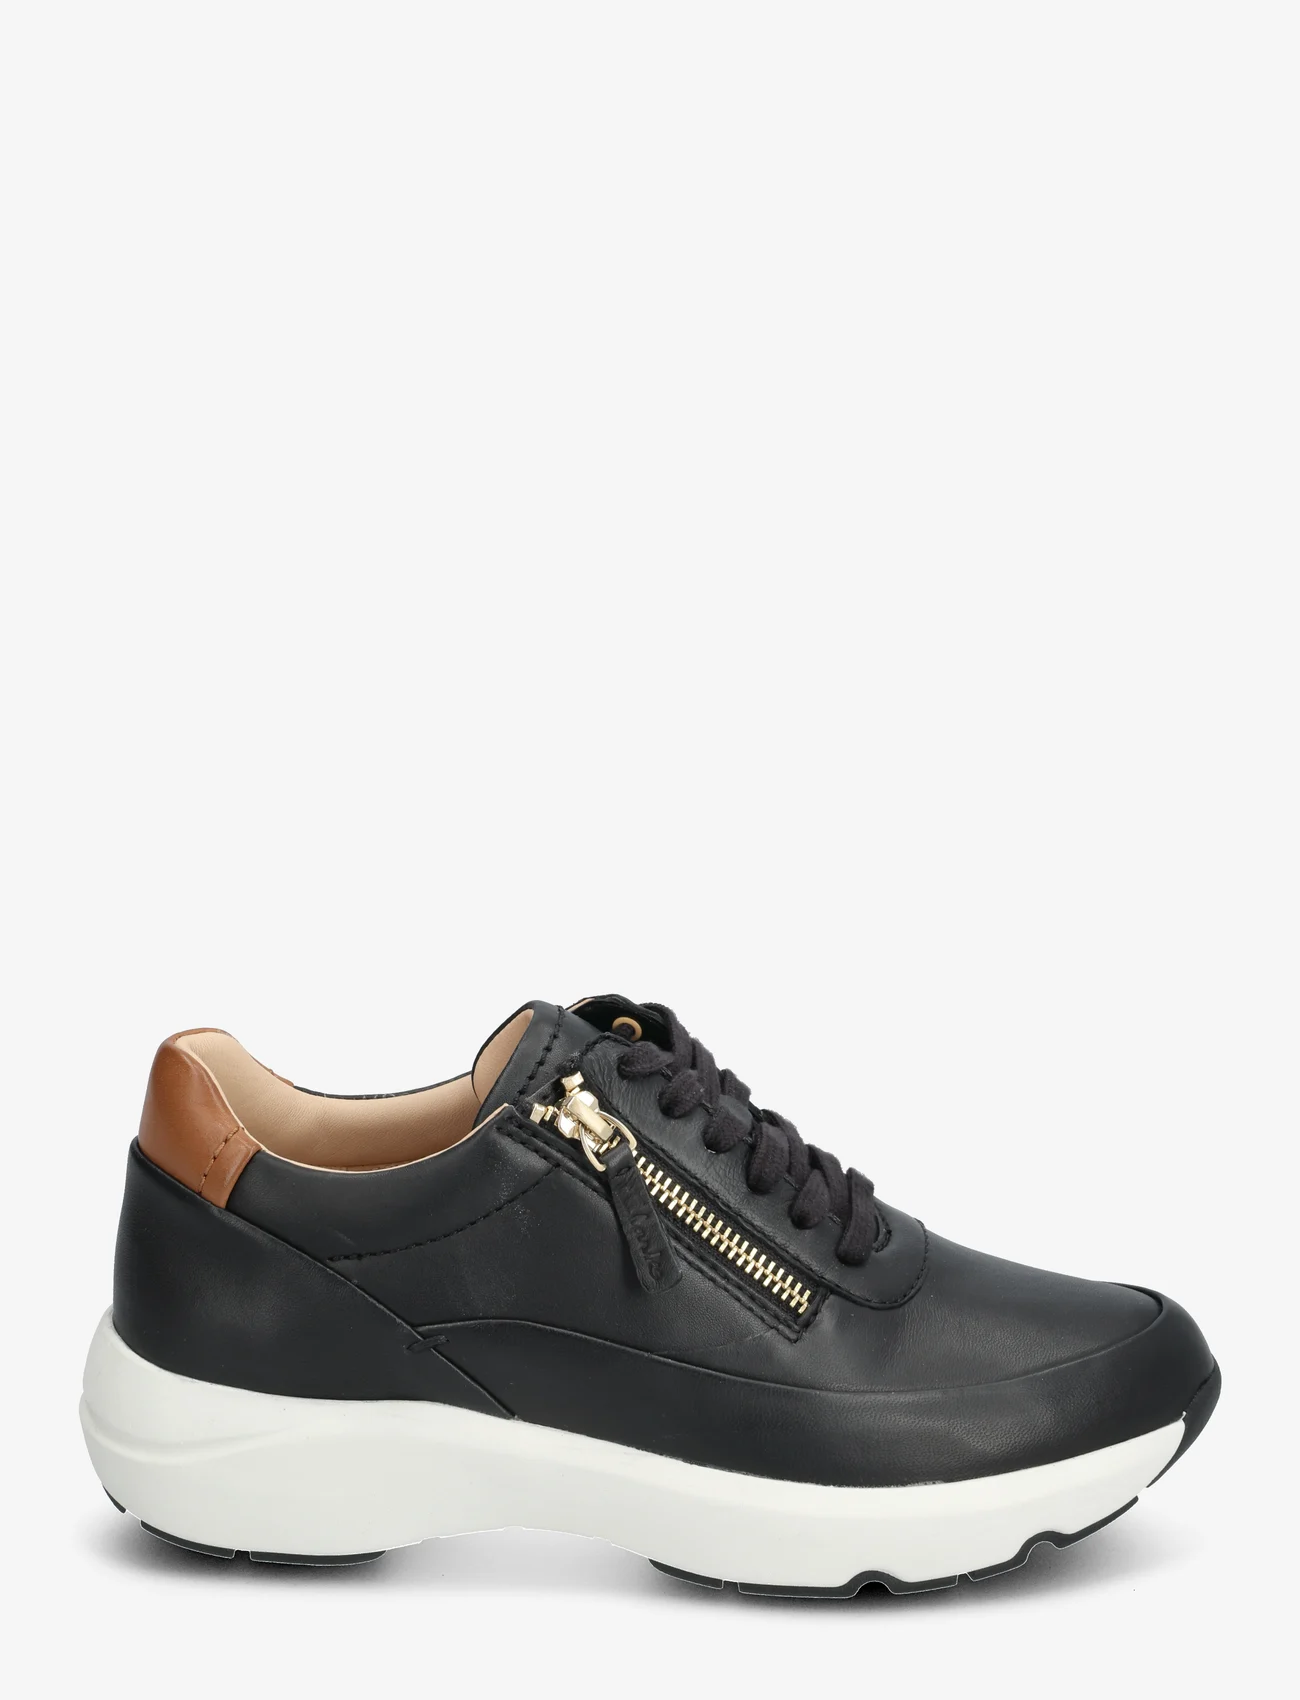 Clarks - Tivoli Zip D - låga sneakers - 1216 black leather - 1